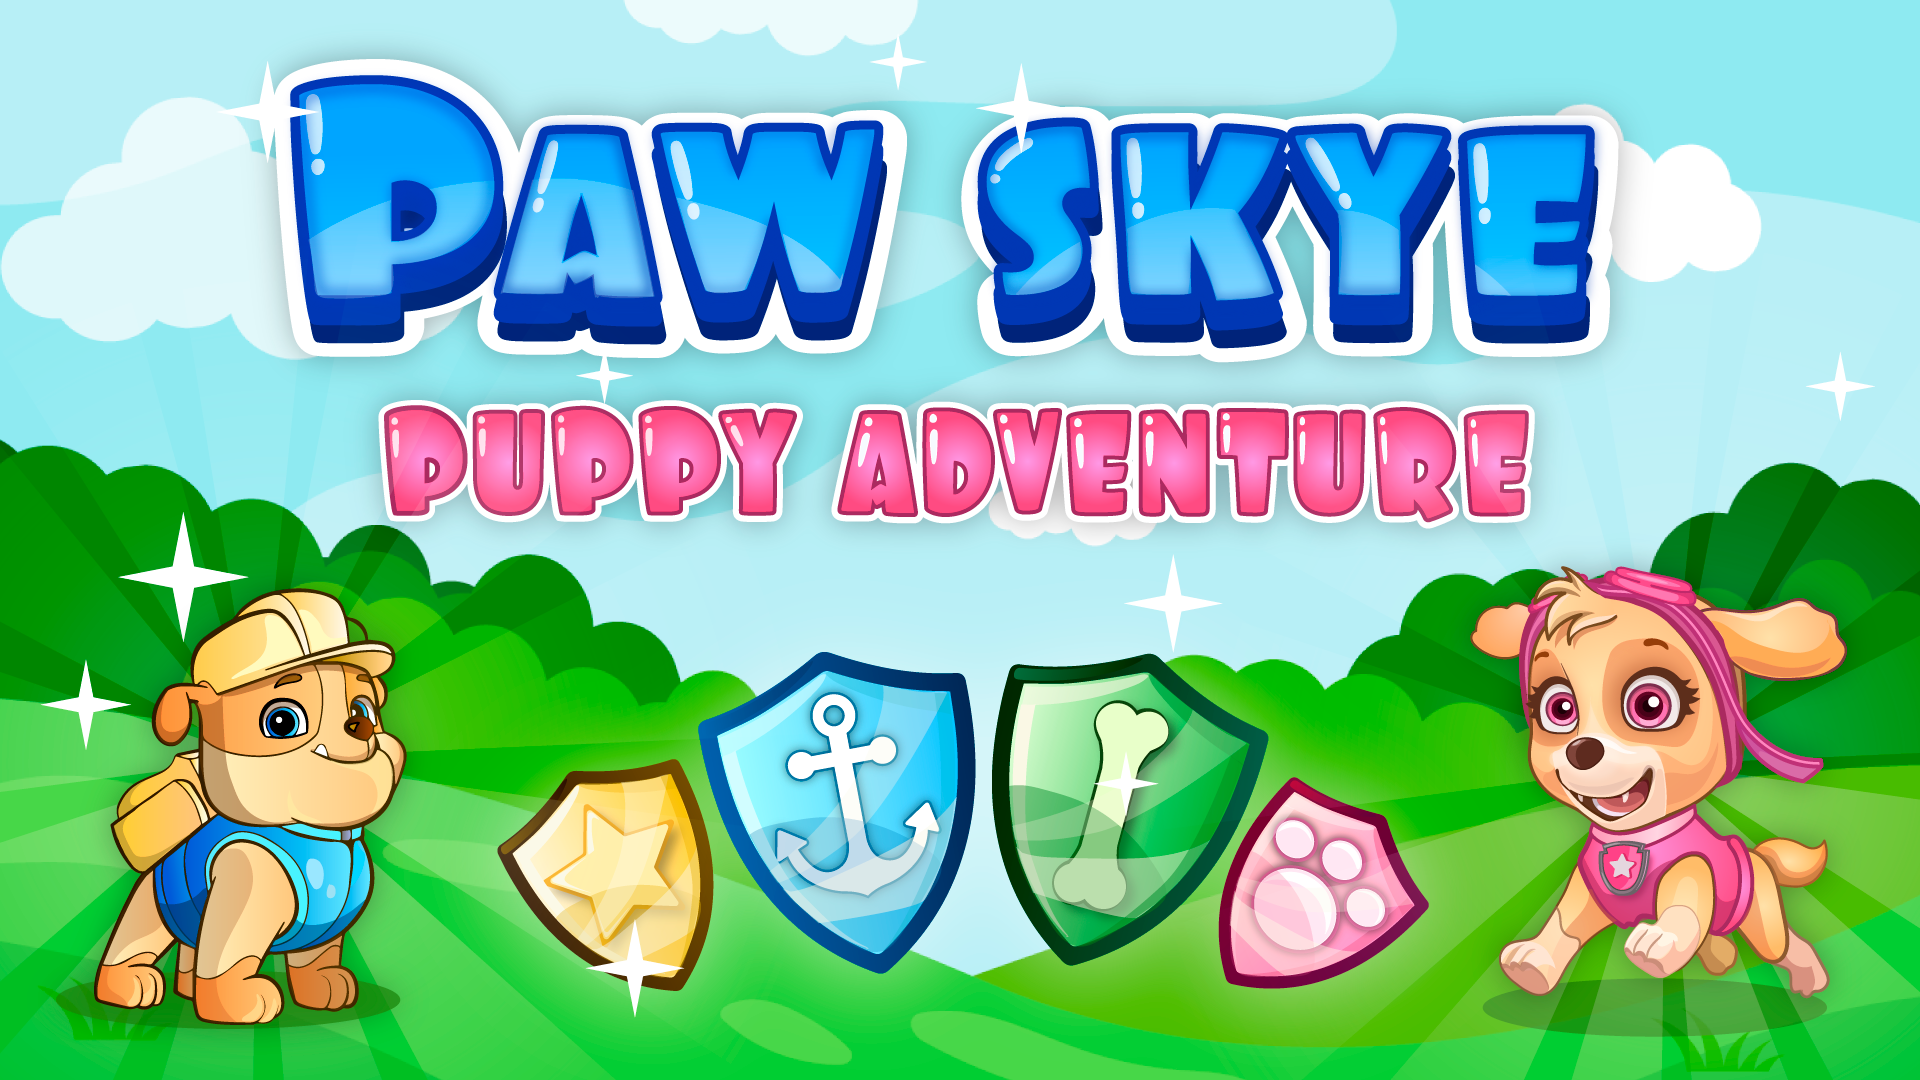 Screenshot 1 of Paw skye puppy adventure 1.0